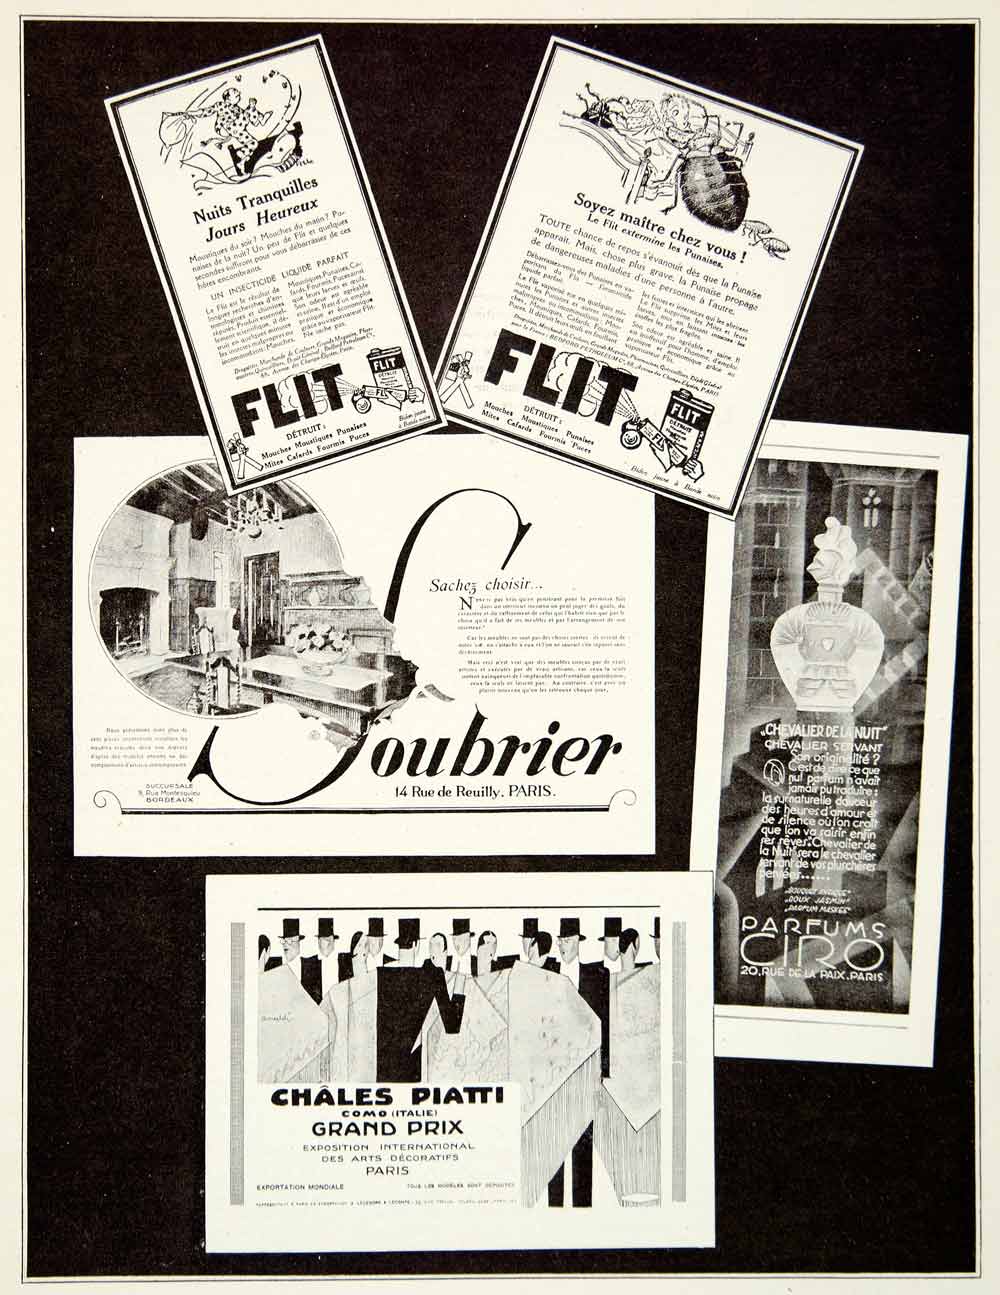 1927 Print Flit Chales Piatti Soubrier Ciro Perfume 14 Rue Reuilly Paris VENA3